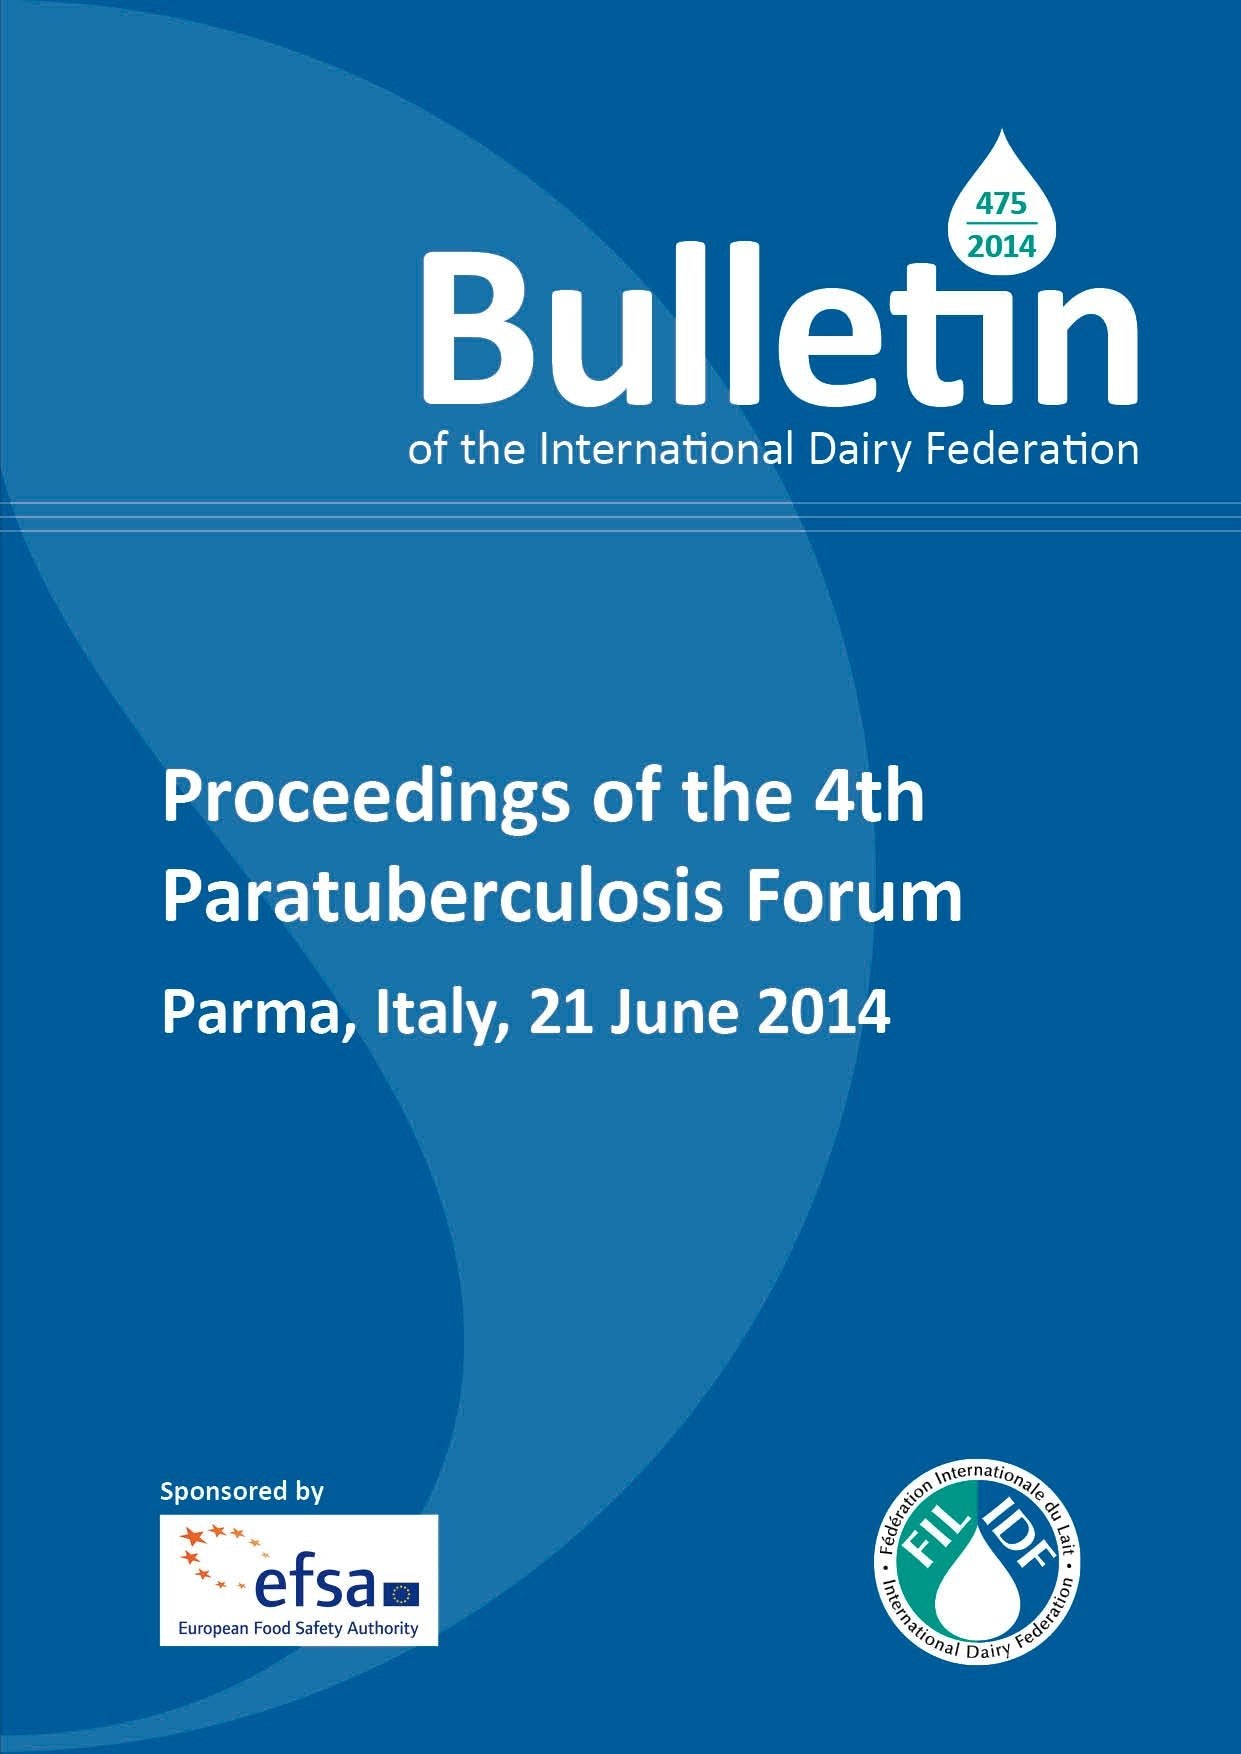 Bulletin of the IDF N° 475/ 2014: Proceedings of the 4th Paratuberculosis Forum - Parma, Italy, 21 June 2014 - FIL-IDF